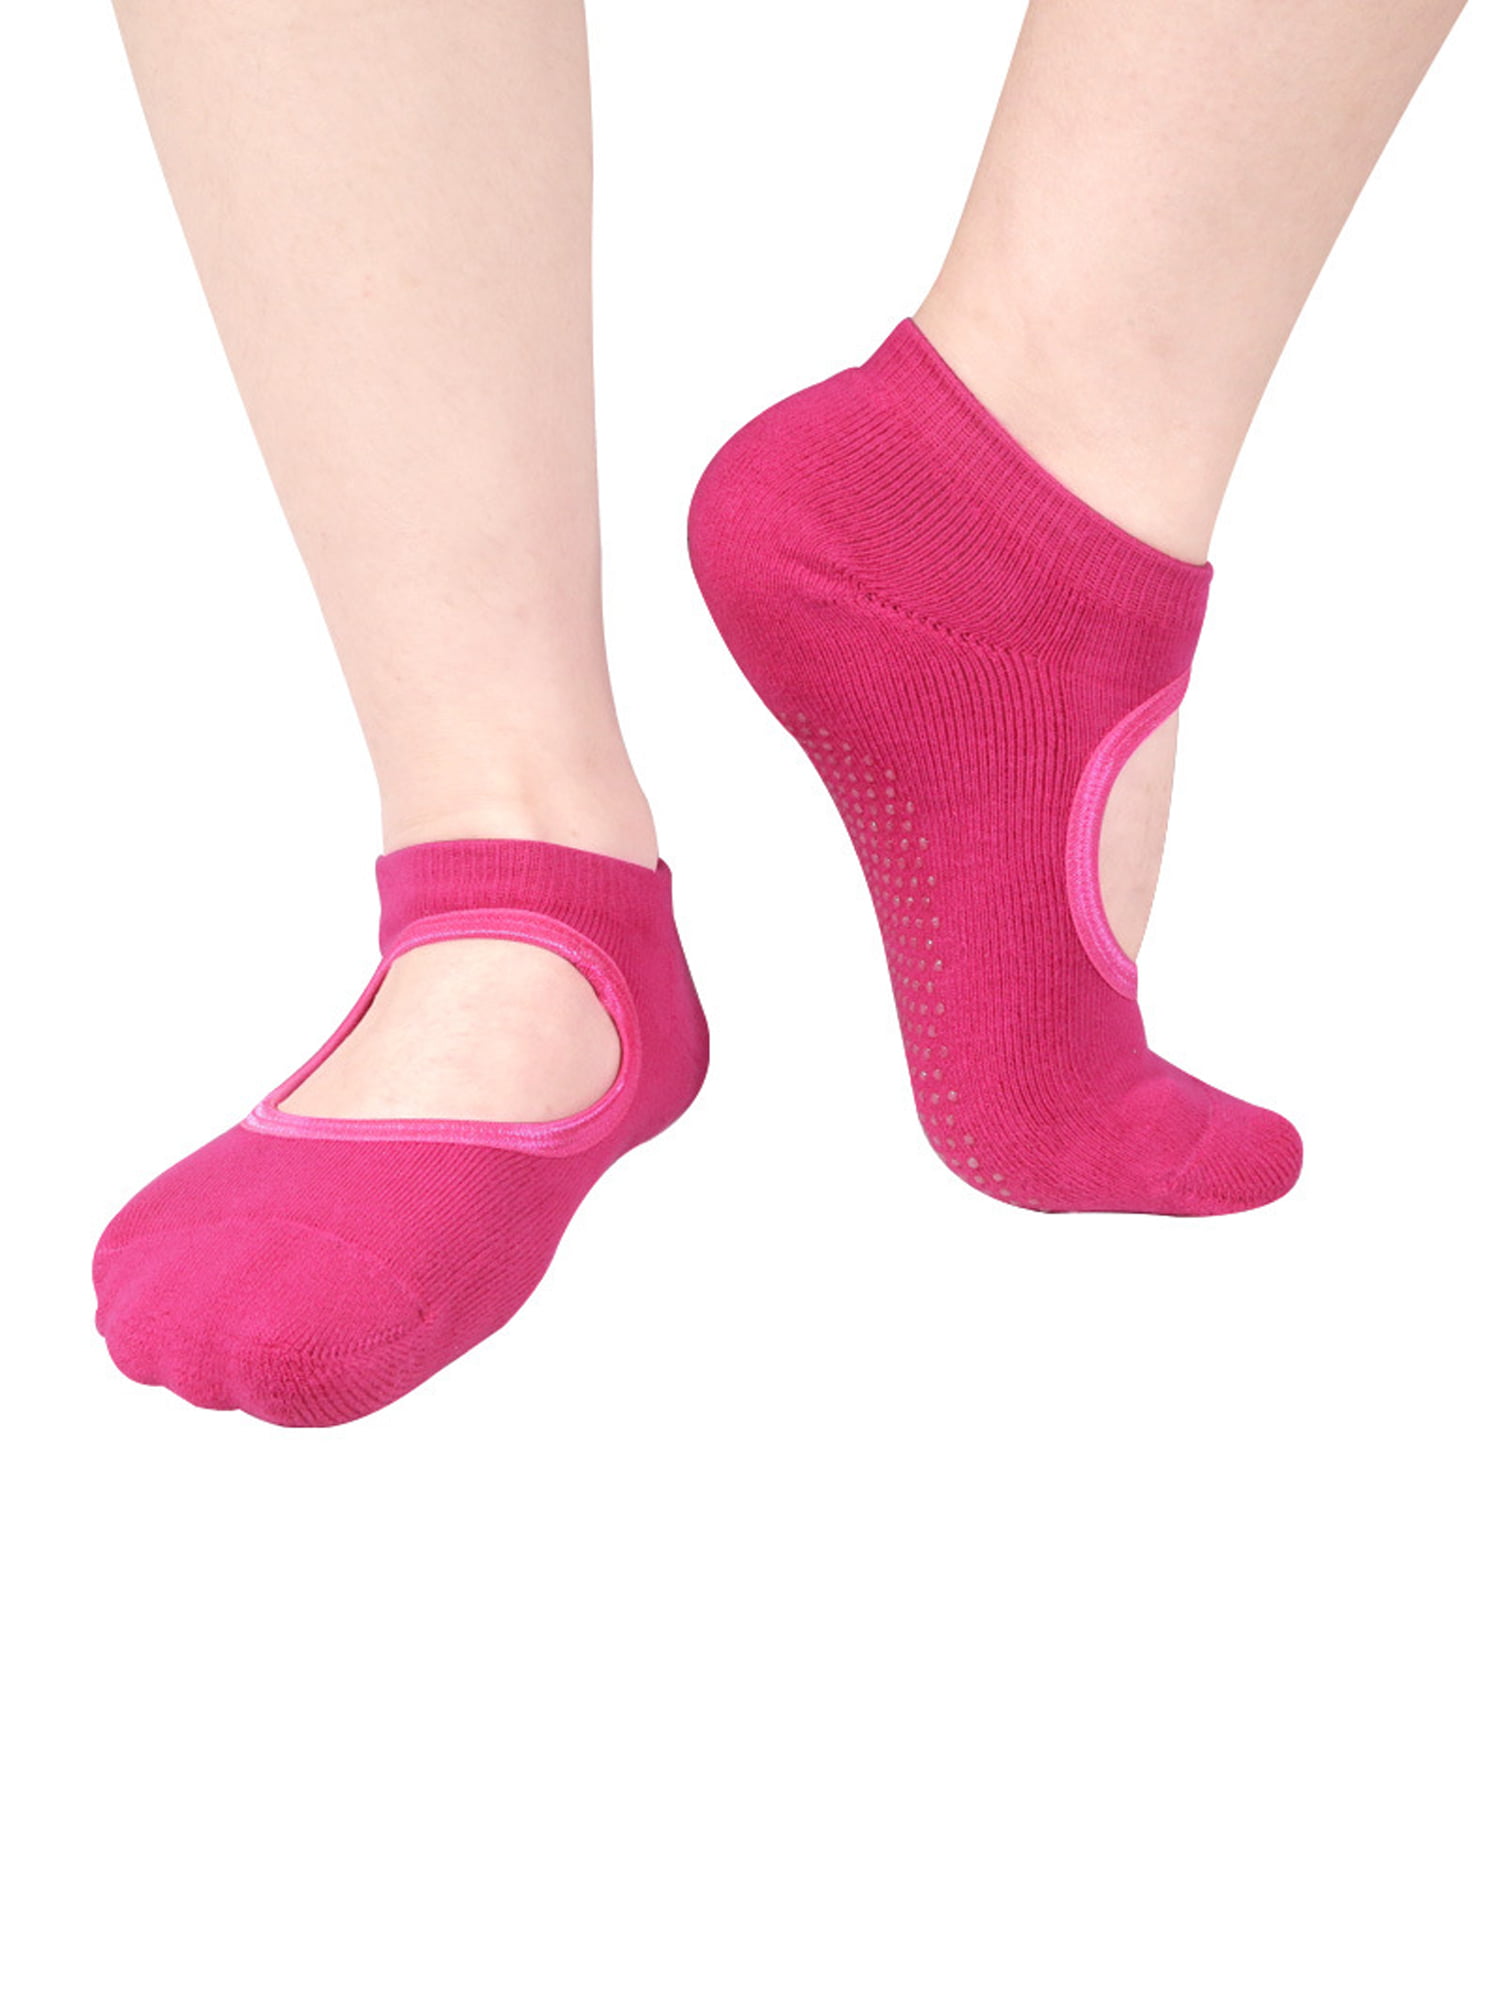 LORYLOLY Yoga Socks & Gloves Set Women 2 Set Non Slip Anti Skid Grip Socks & Gloves Breathable Cotton with Anti-Slip Silicone Surface for Yoga Pilates Fitness Dancing Barre EU35-40/UK3-6.5